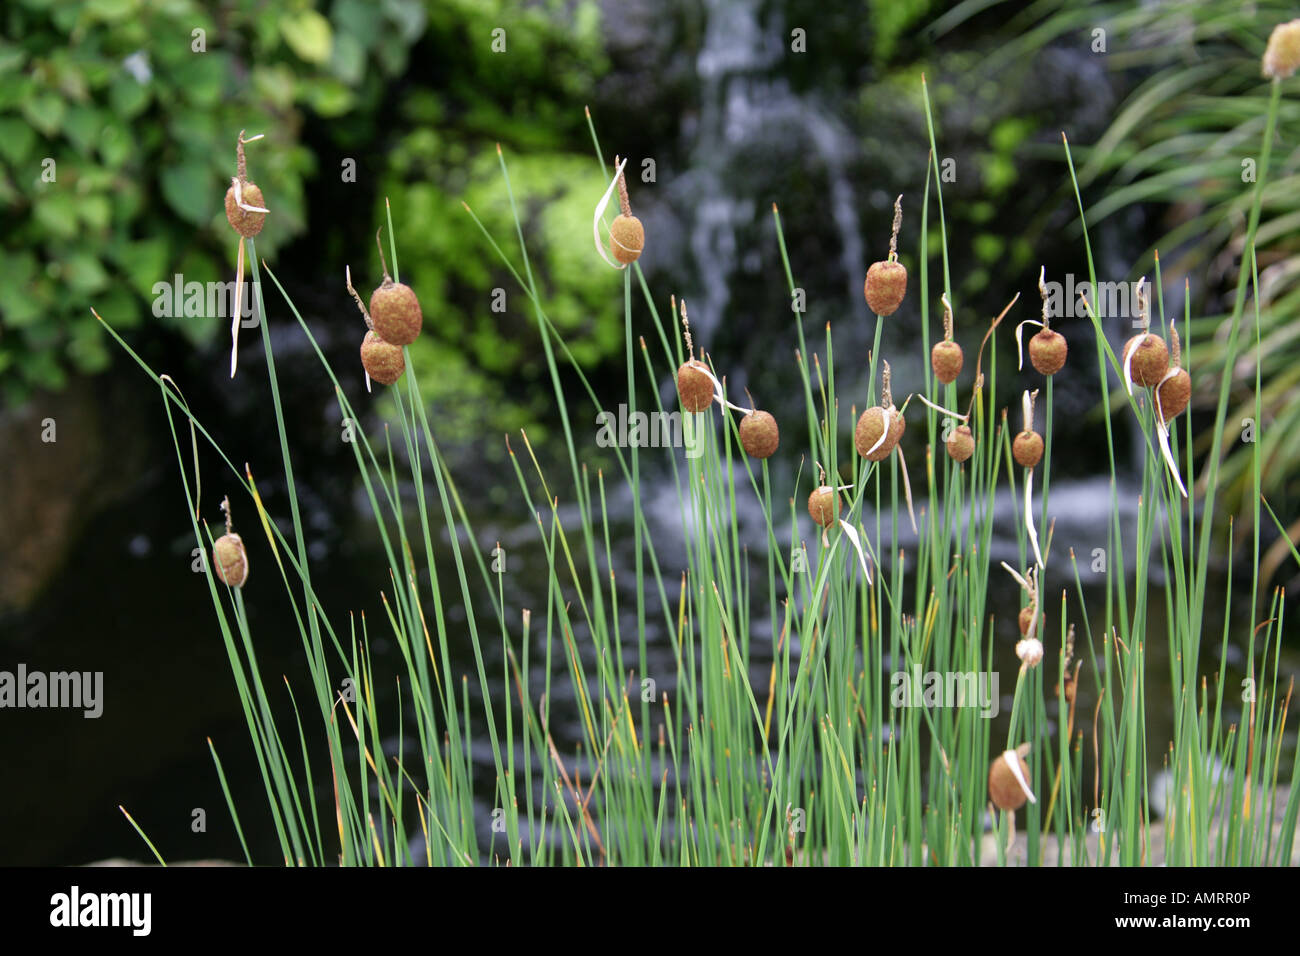 Bulruse naine alias Dwarf Cattail ou Reedmace, Typha minima Typhaceae. Plante aquatique marginale Banque D'Images